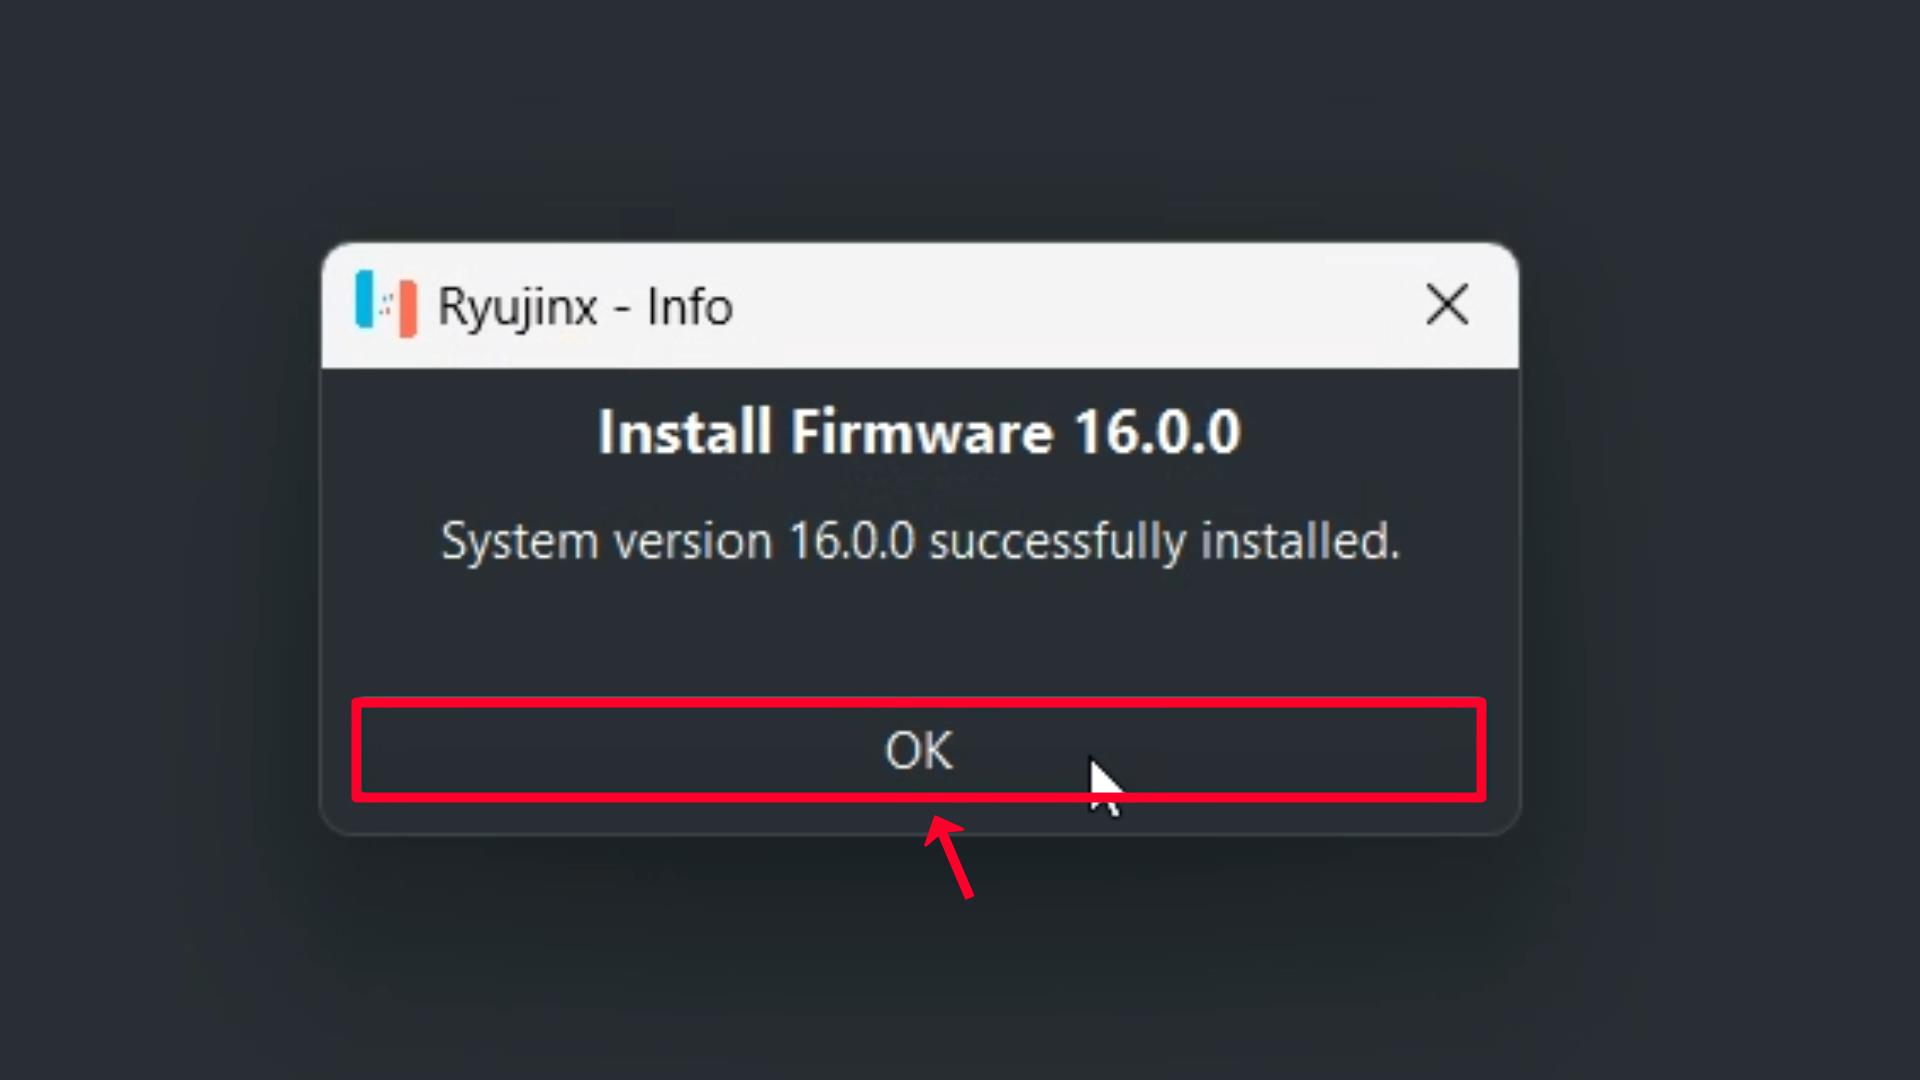 Ryujinx Prod Keys & Title Keys v17.0.0 Download (Latest Version) - Old ROMs